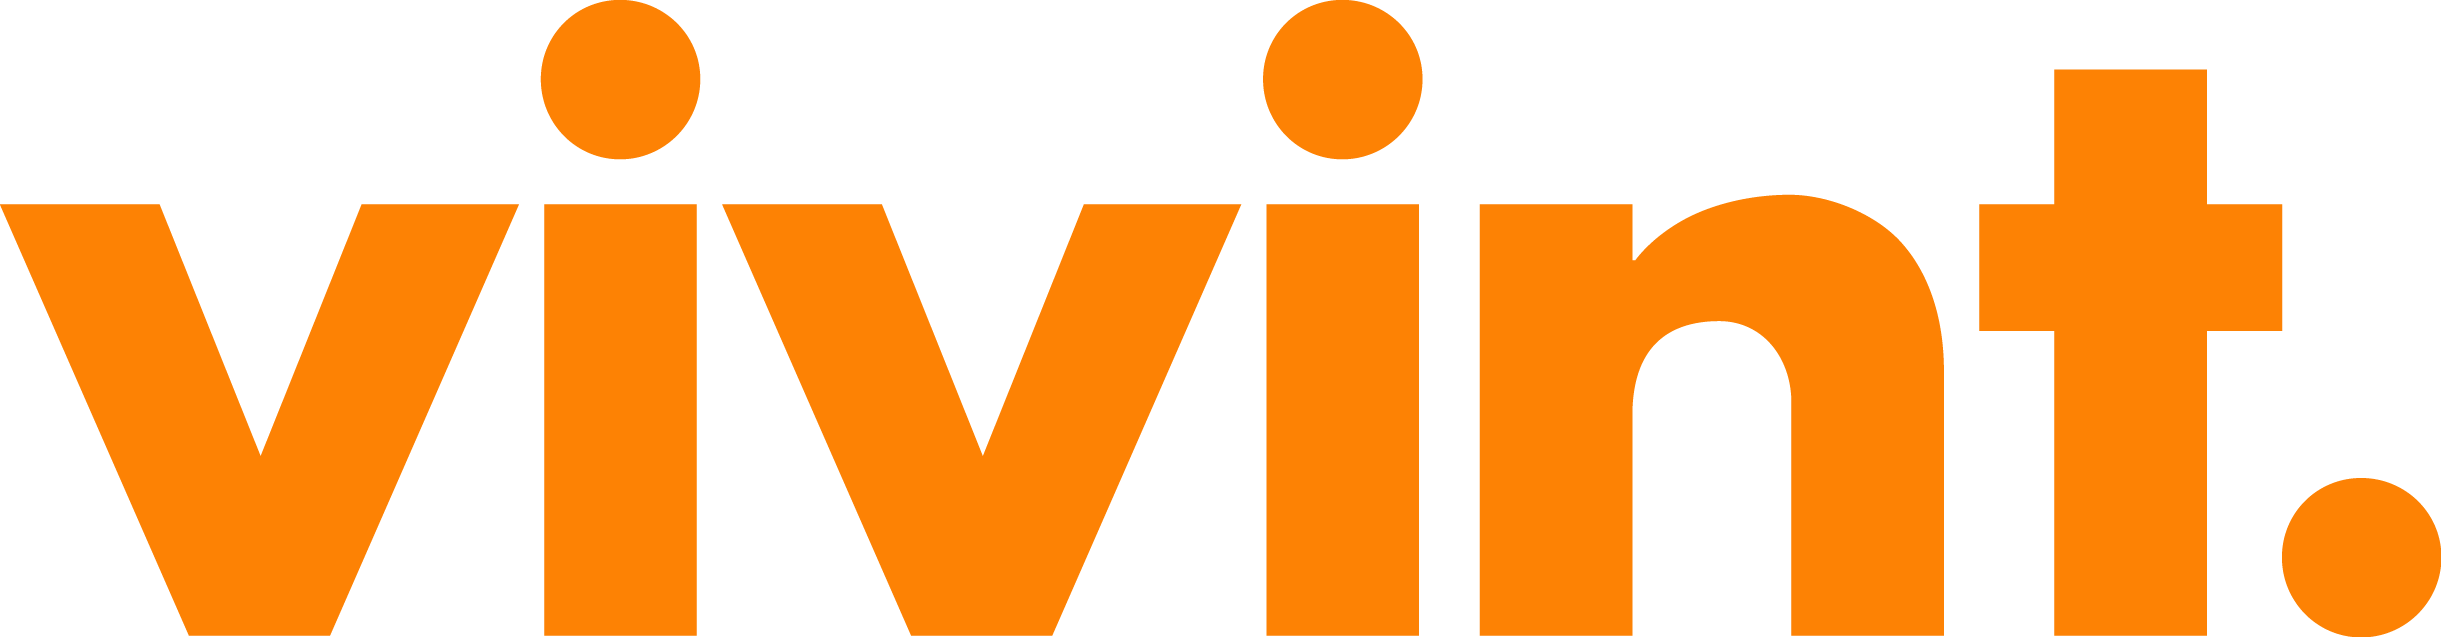 Vivint Logo Png Image